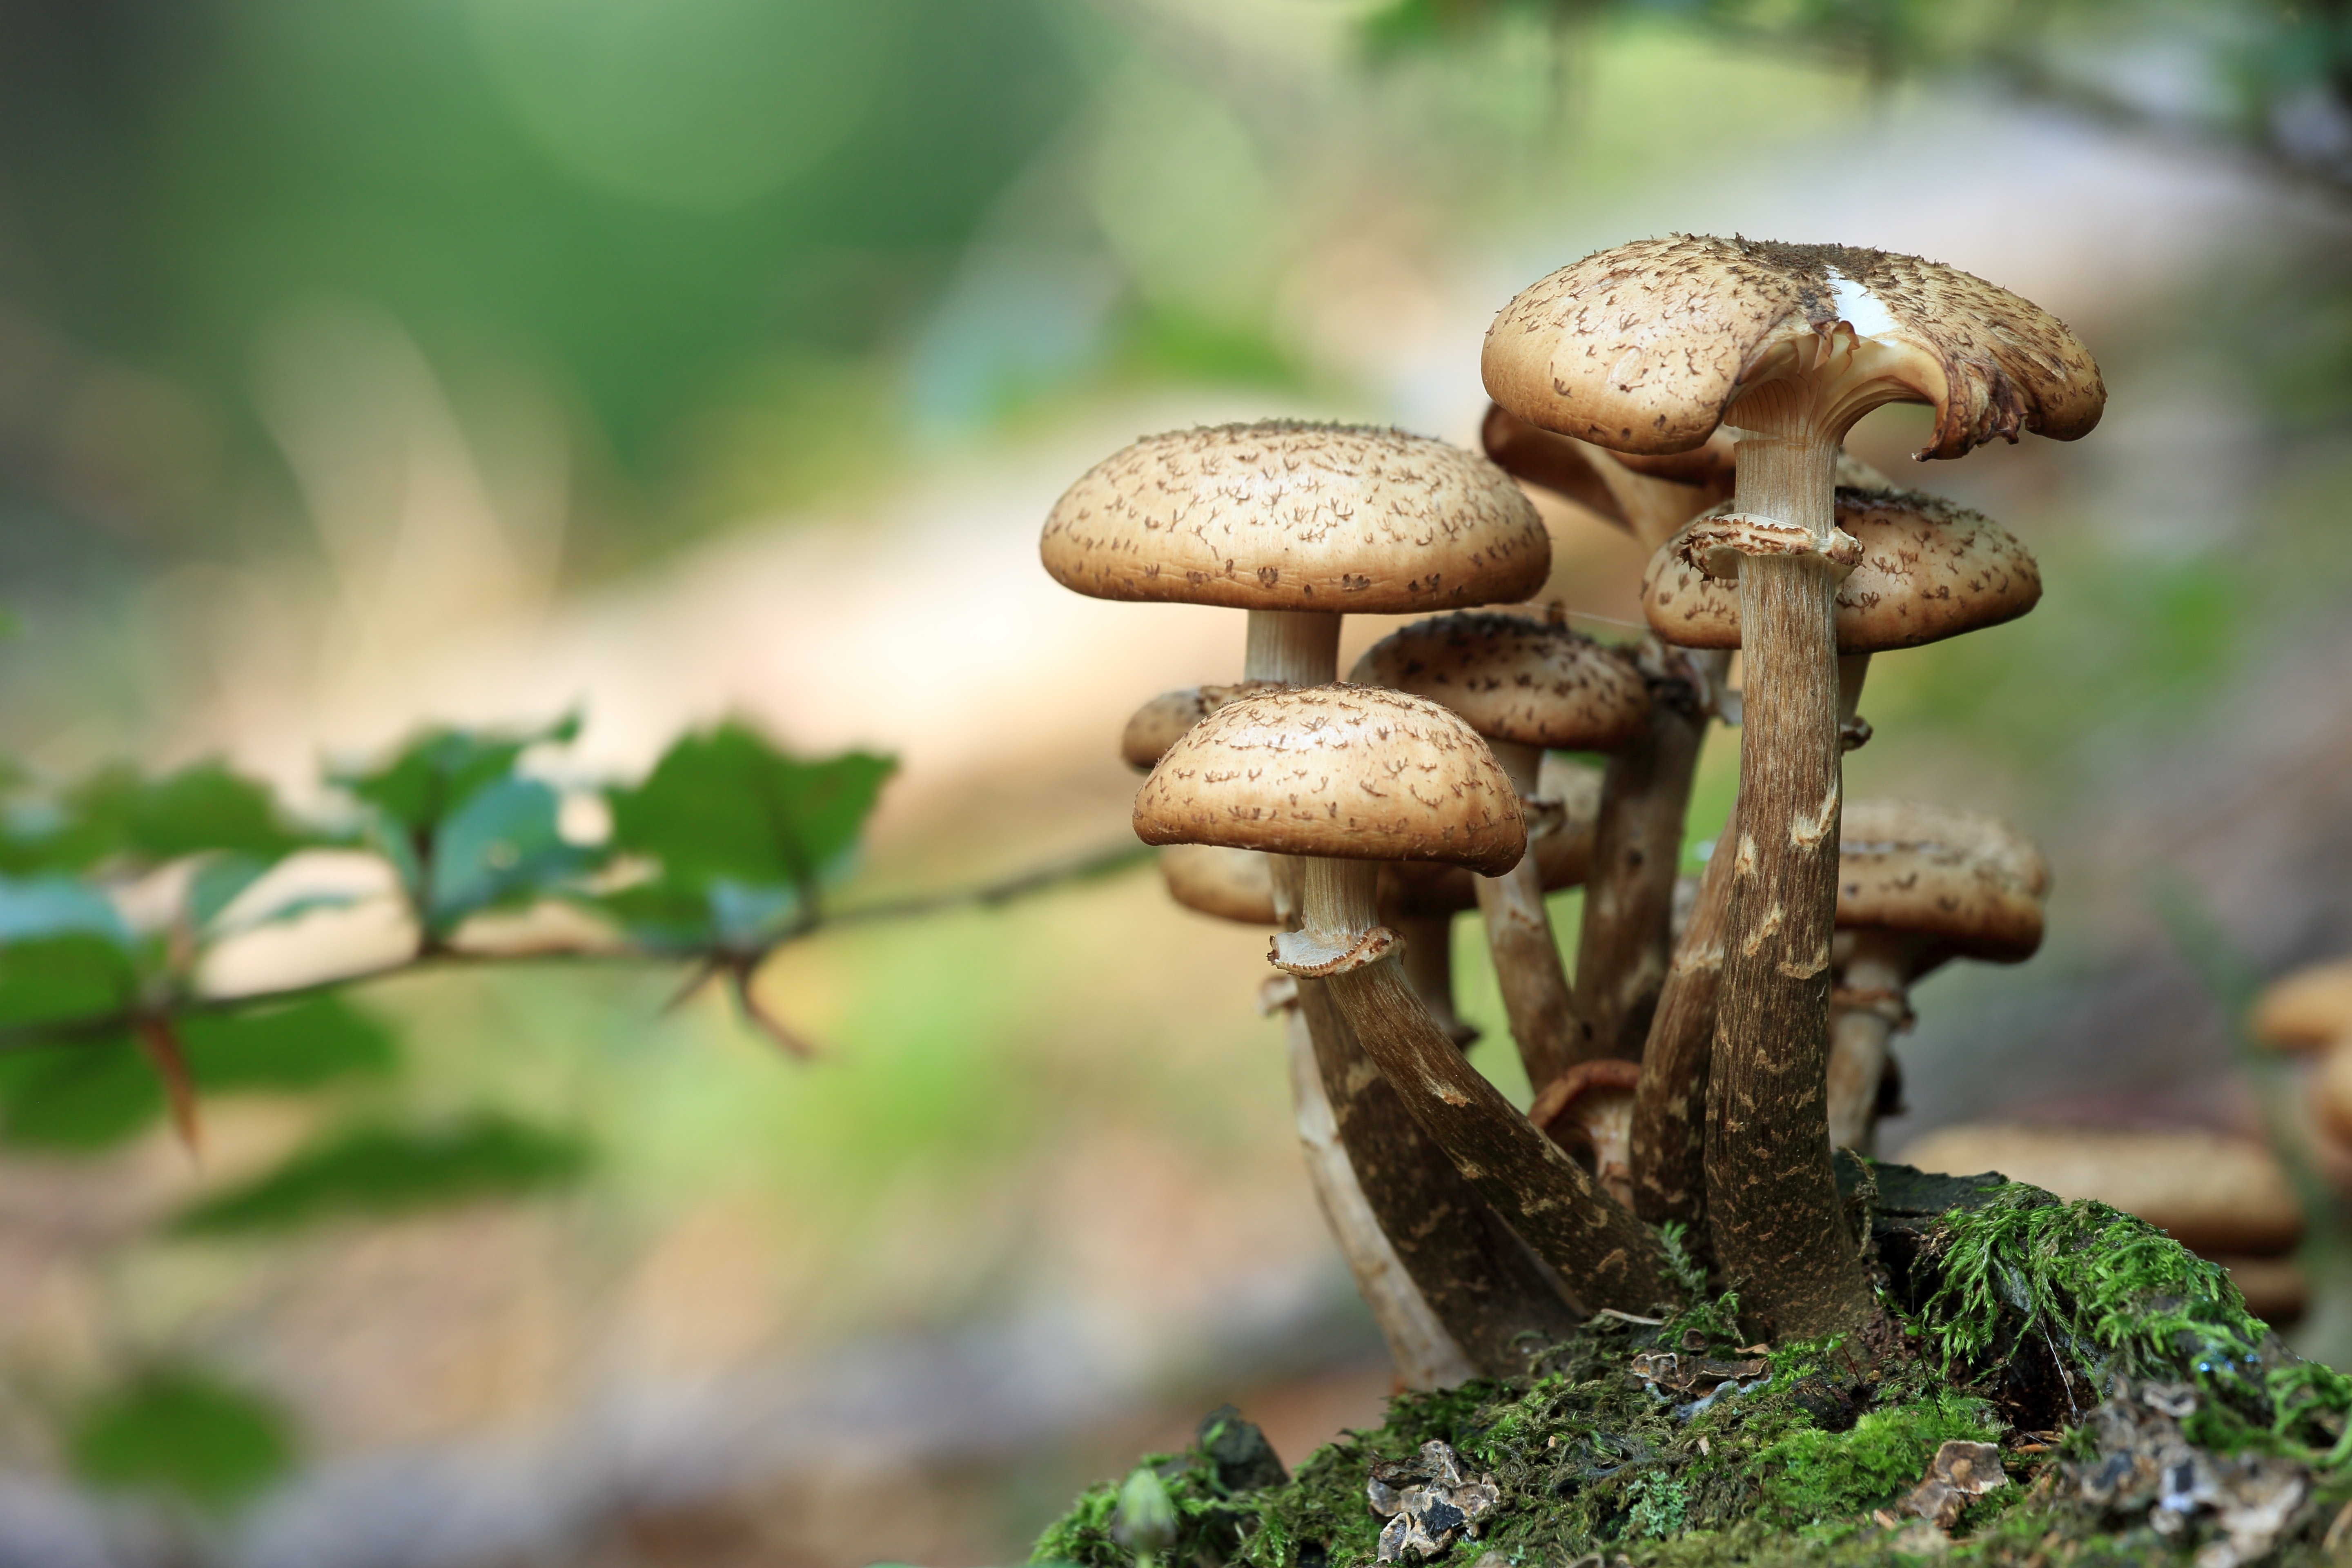 Victorian Homicide Squad investigates three fatal mushroom poisonings